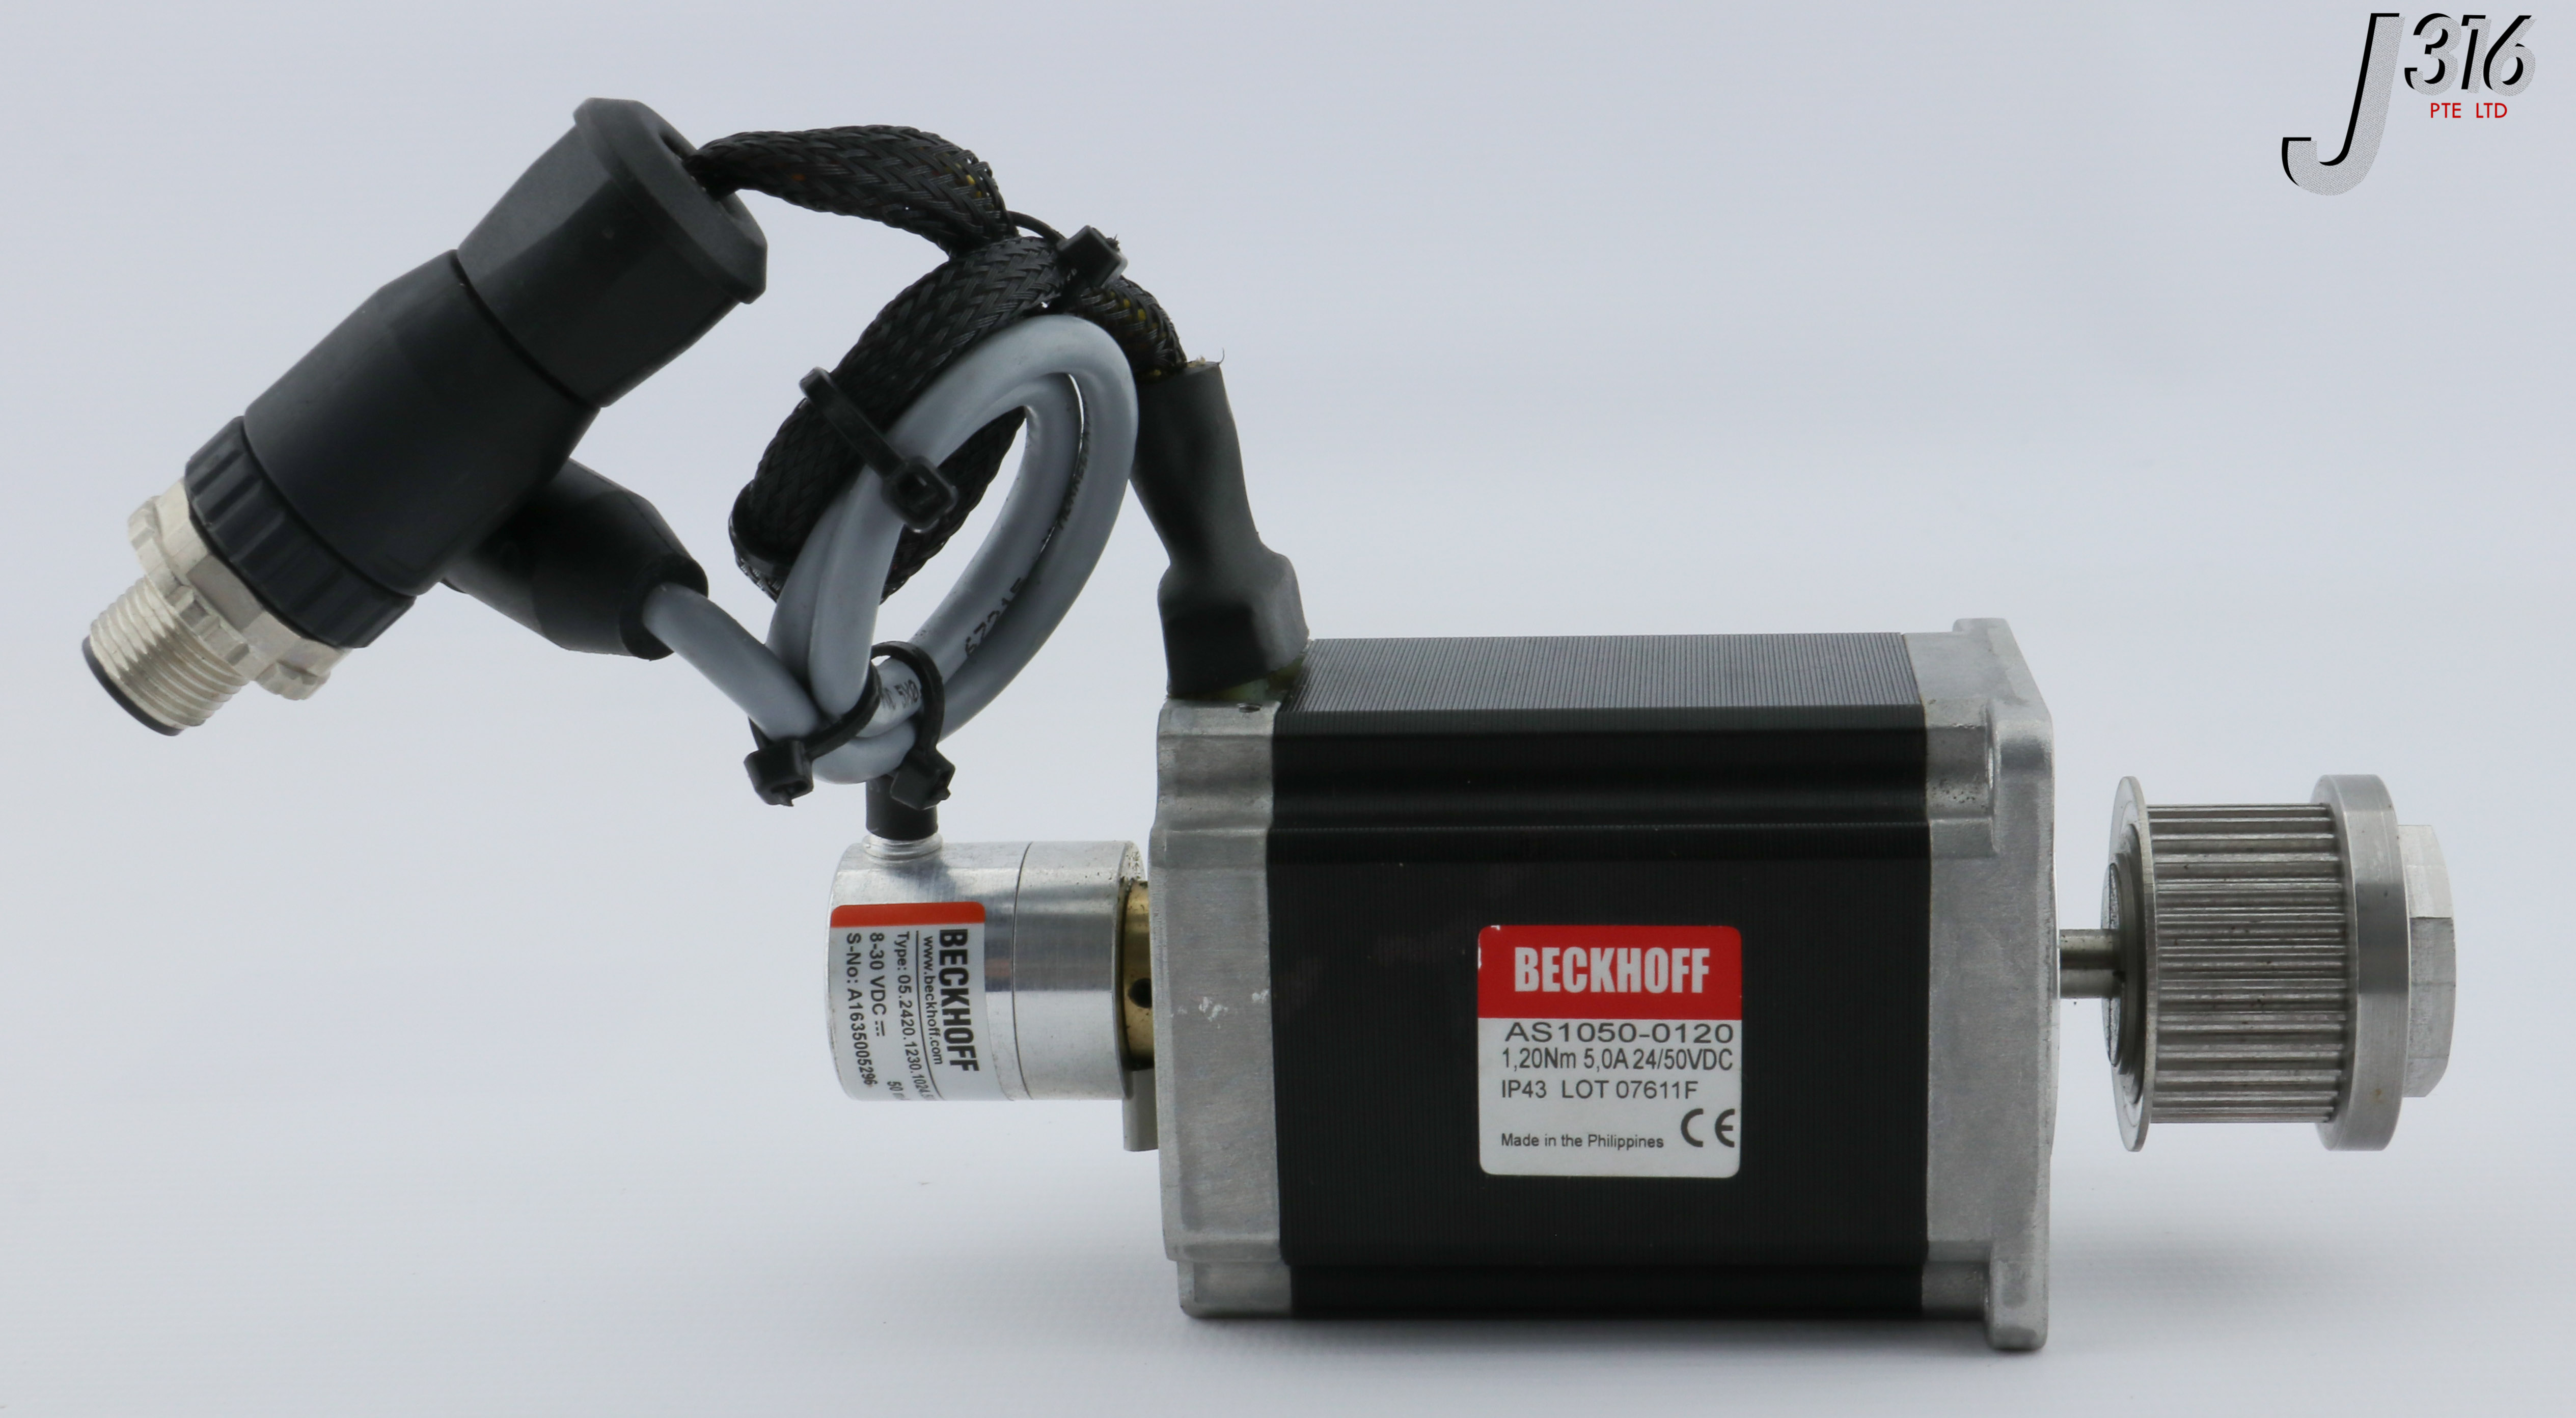 Beckhoff AS1060-0120 Stepper Motor w/ Encoder type 05.2420.1230.1024.5009 